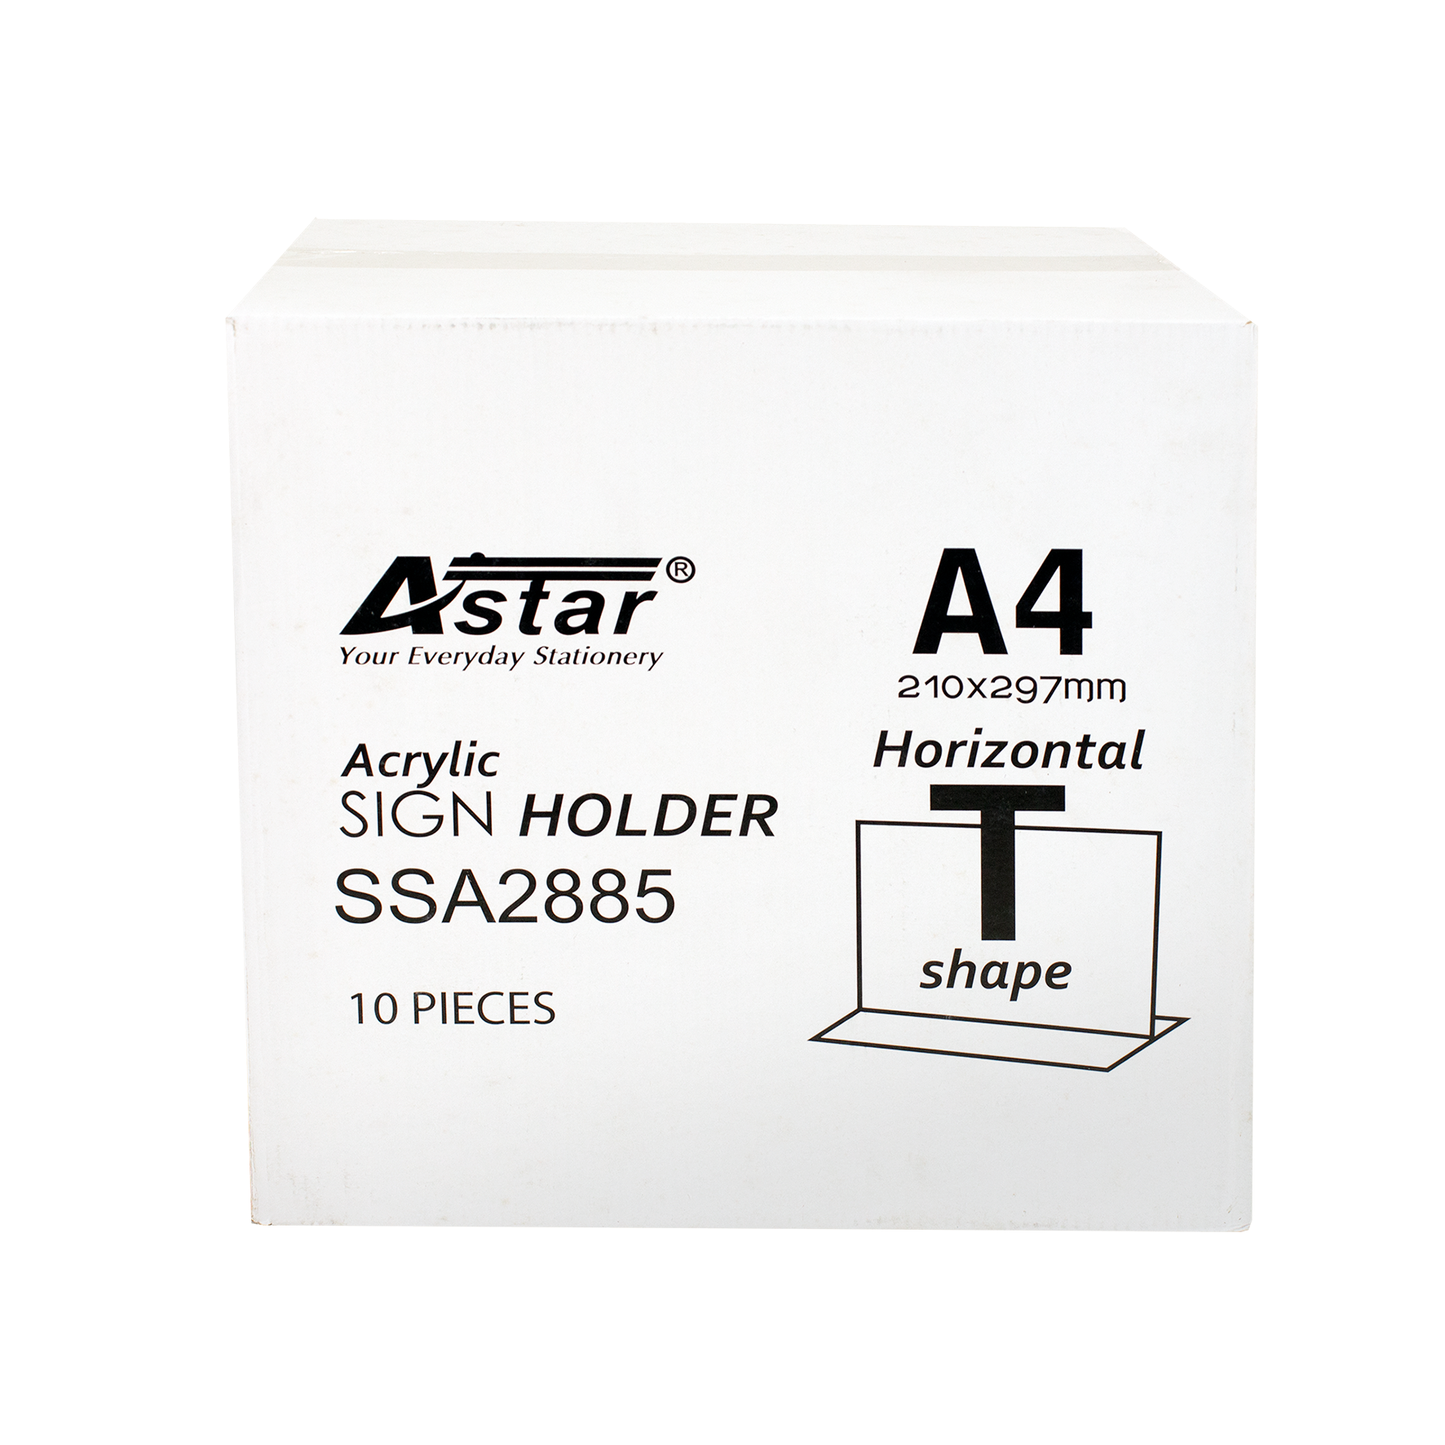 SSA2885 - ASTAR ACRYLIC SIGN HOLDER